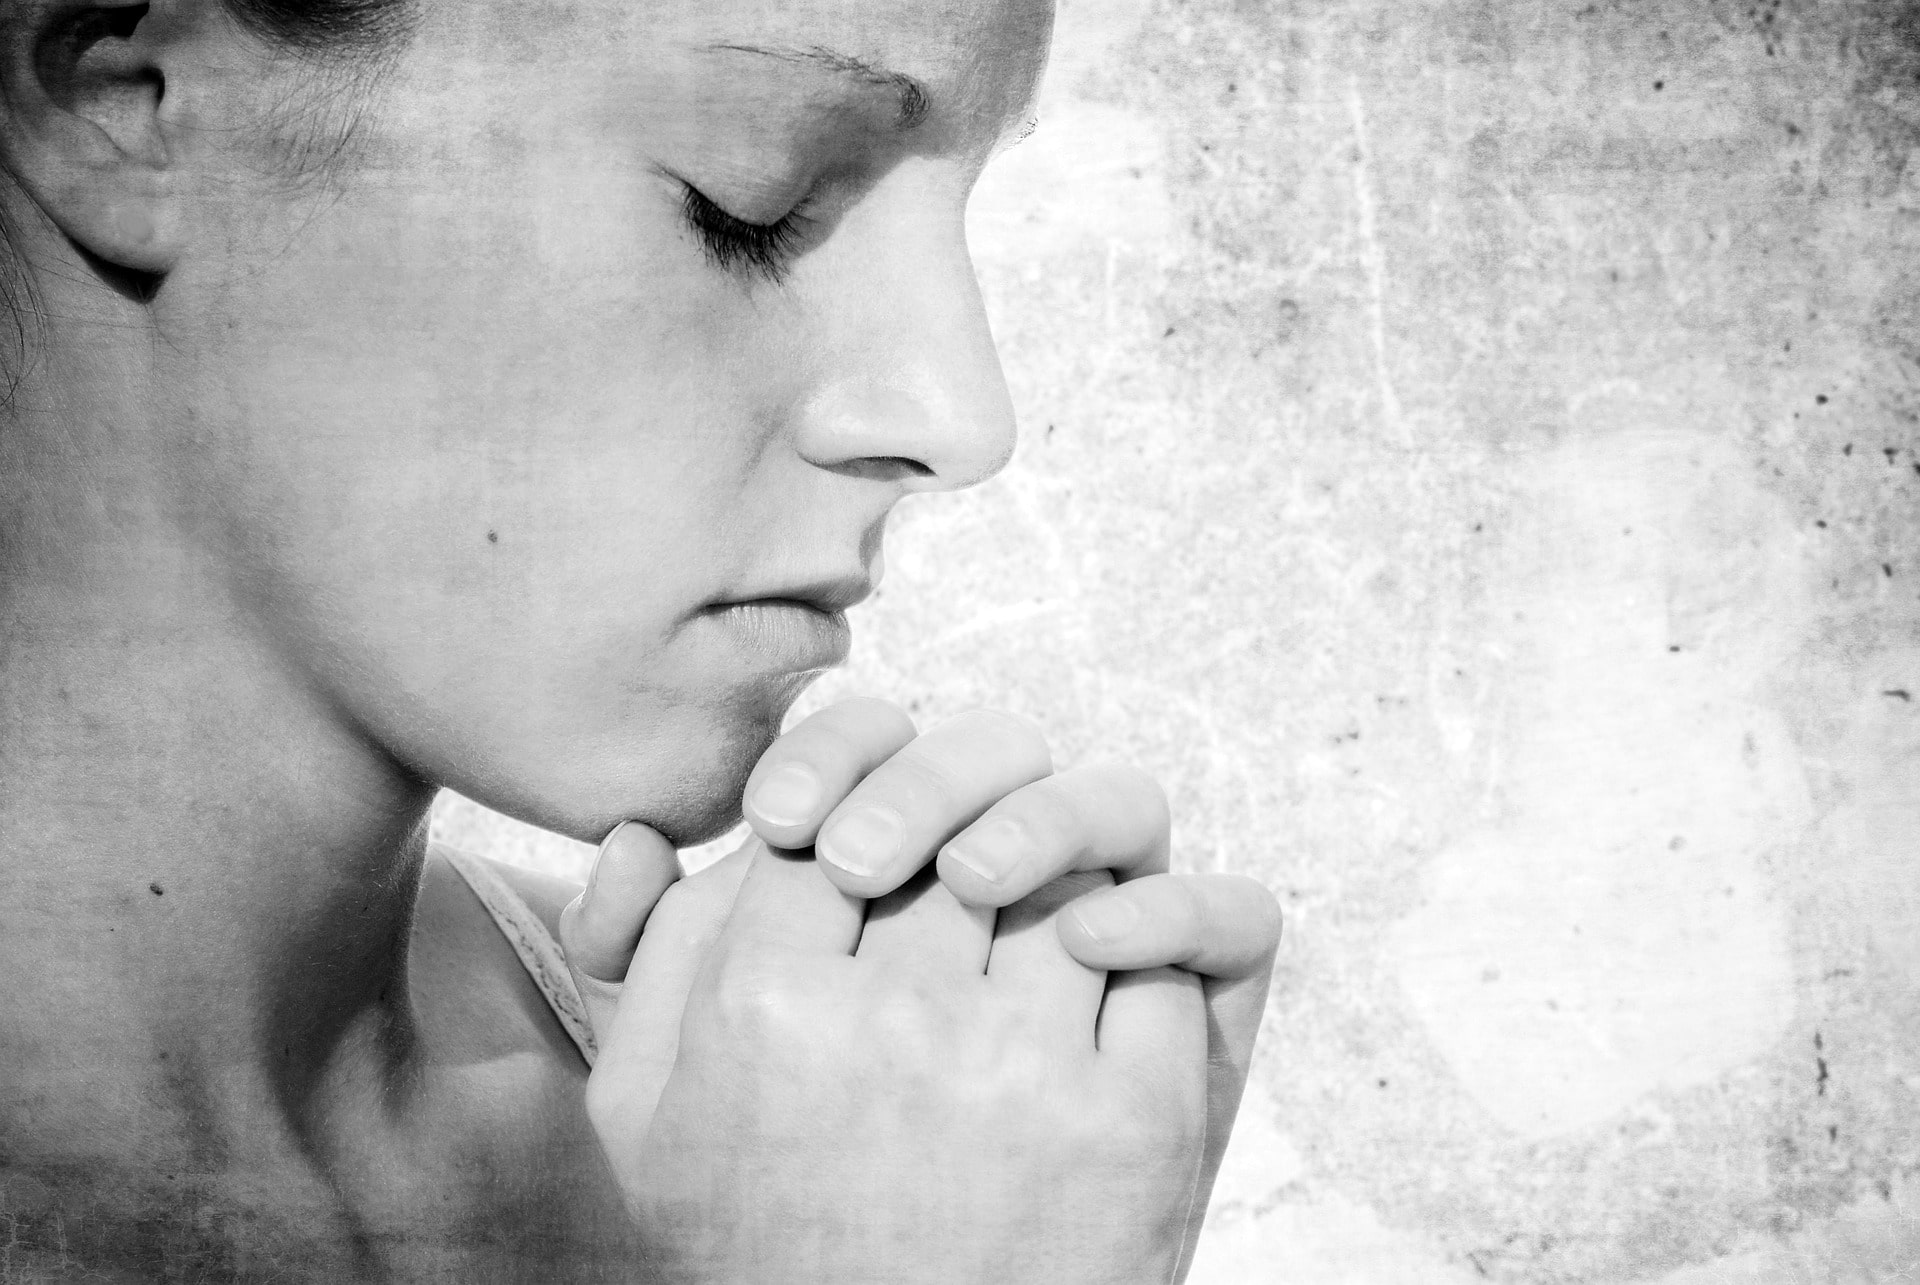 Prayer talking to God